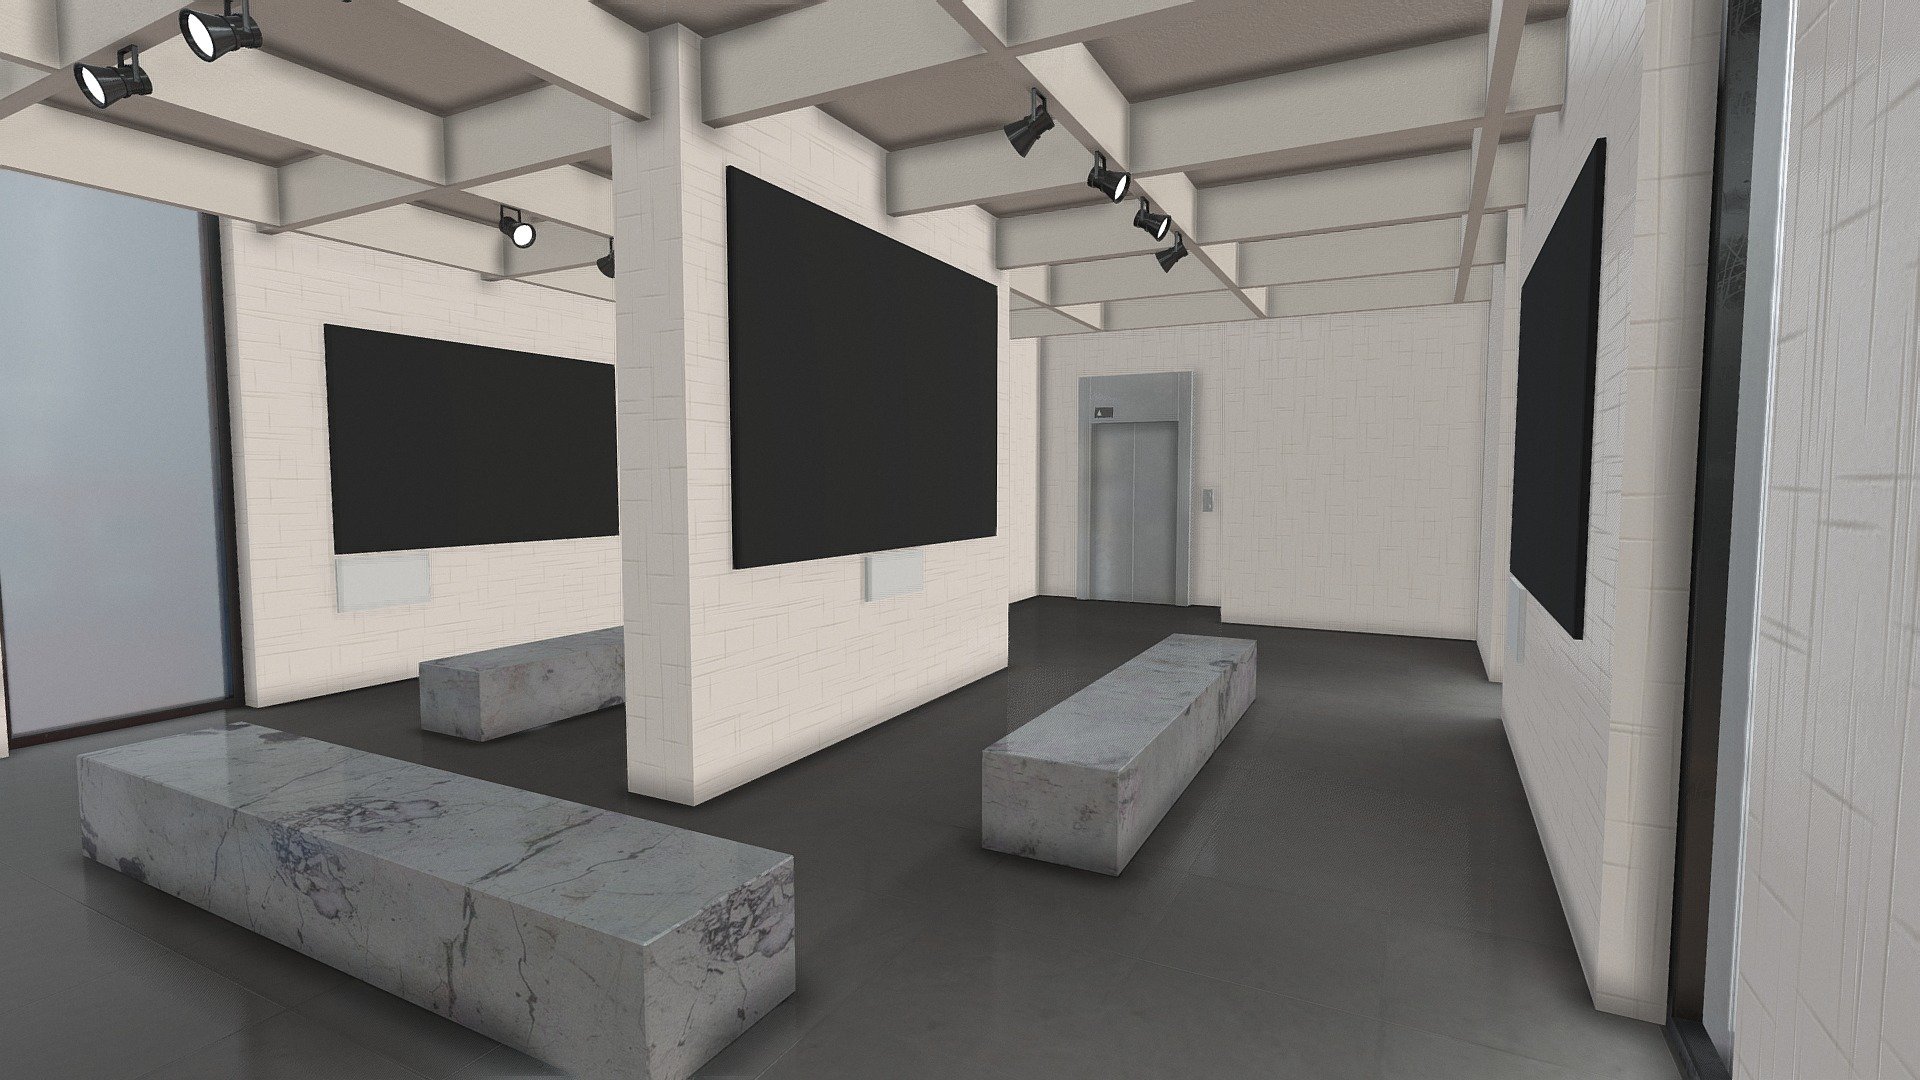 VR Art Gallery 2022 

made in Blender - VR Art Gallery 2022 - Buy Royalty Free 3D model by Gioy 3d model